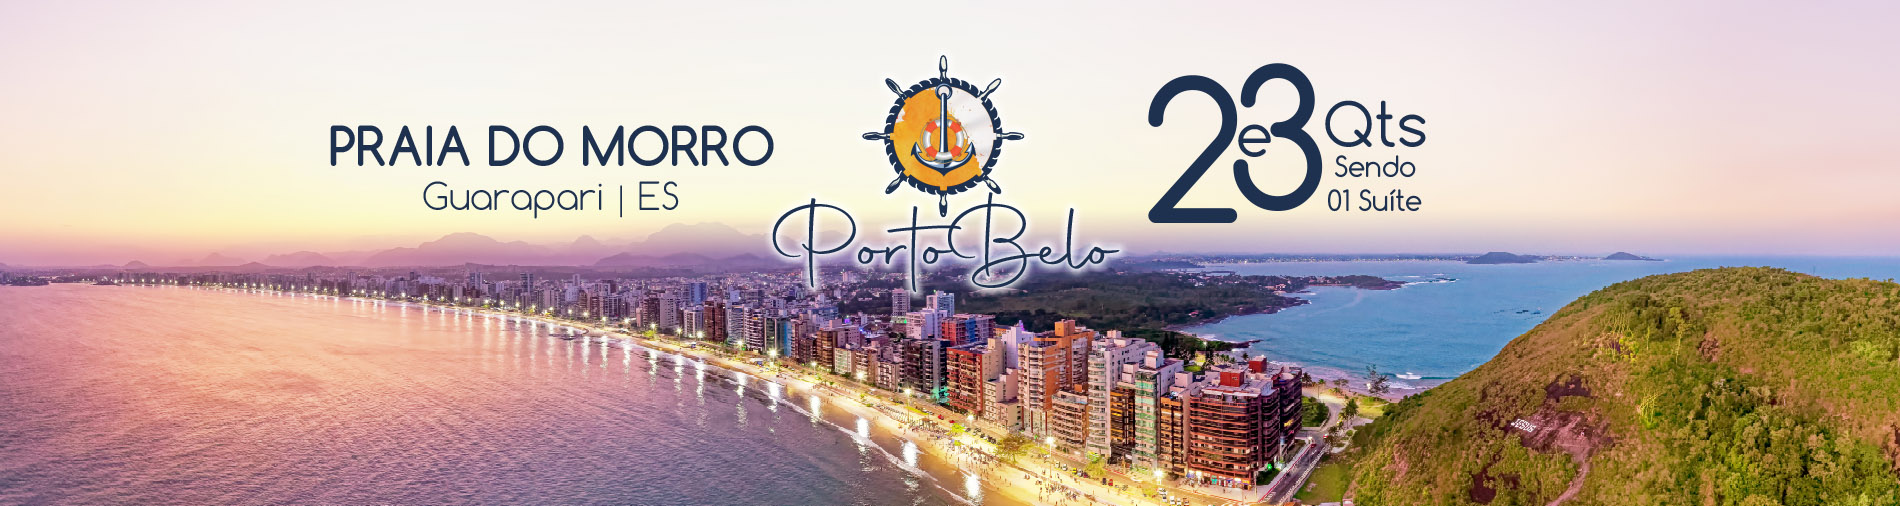 Banner Porto Belo 01